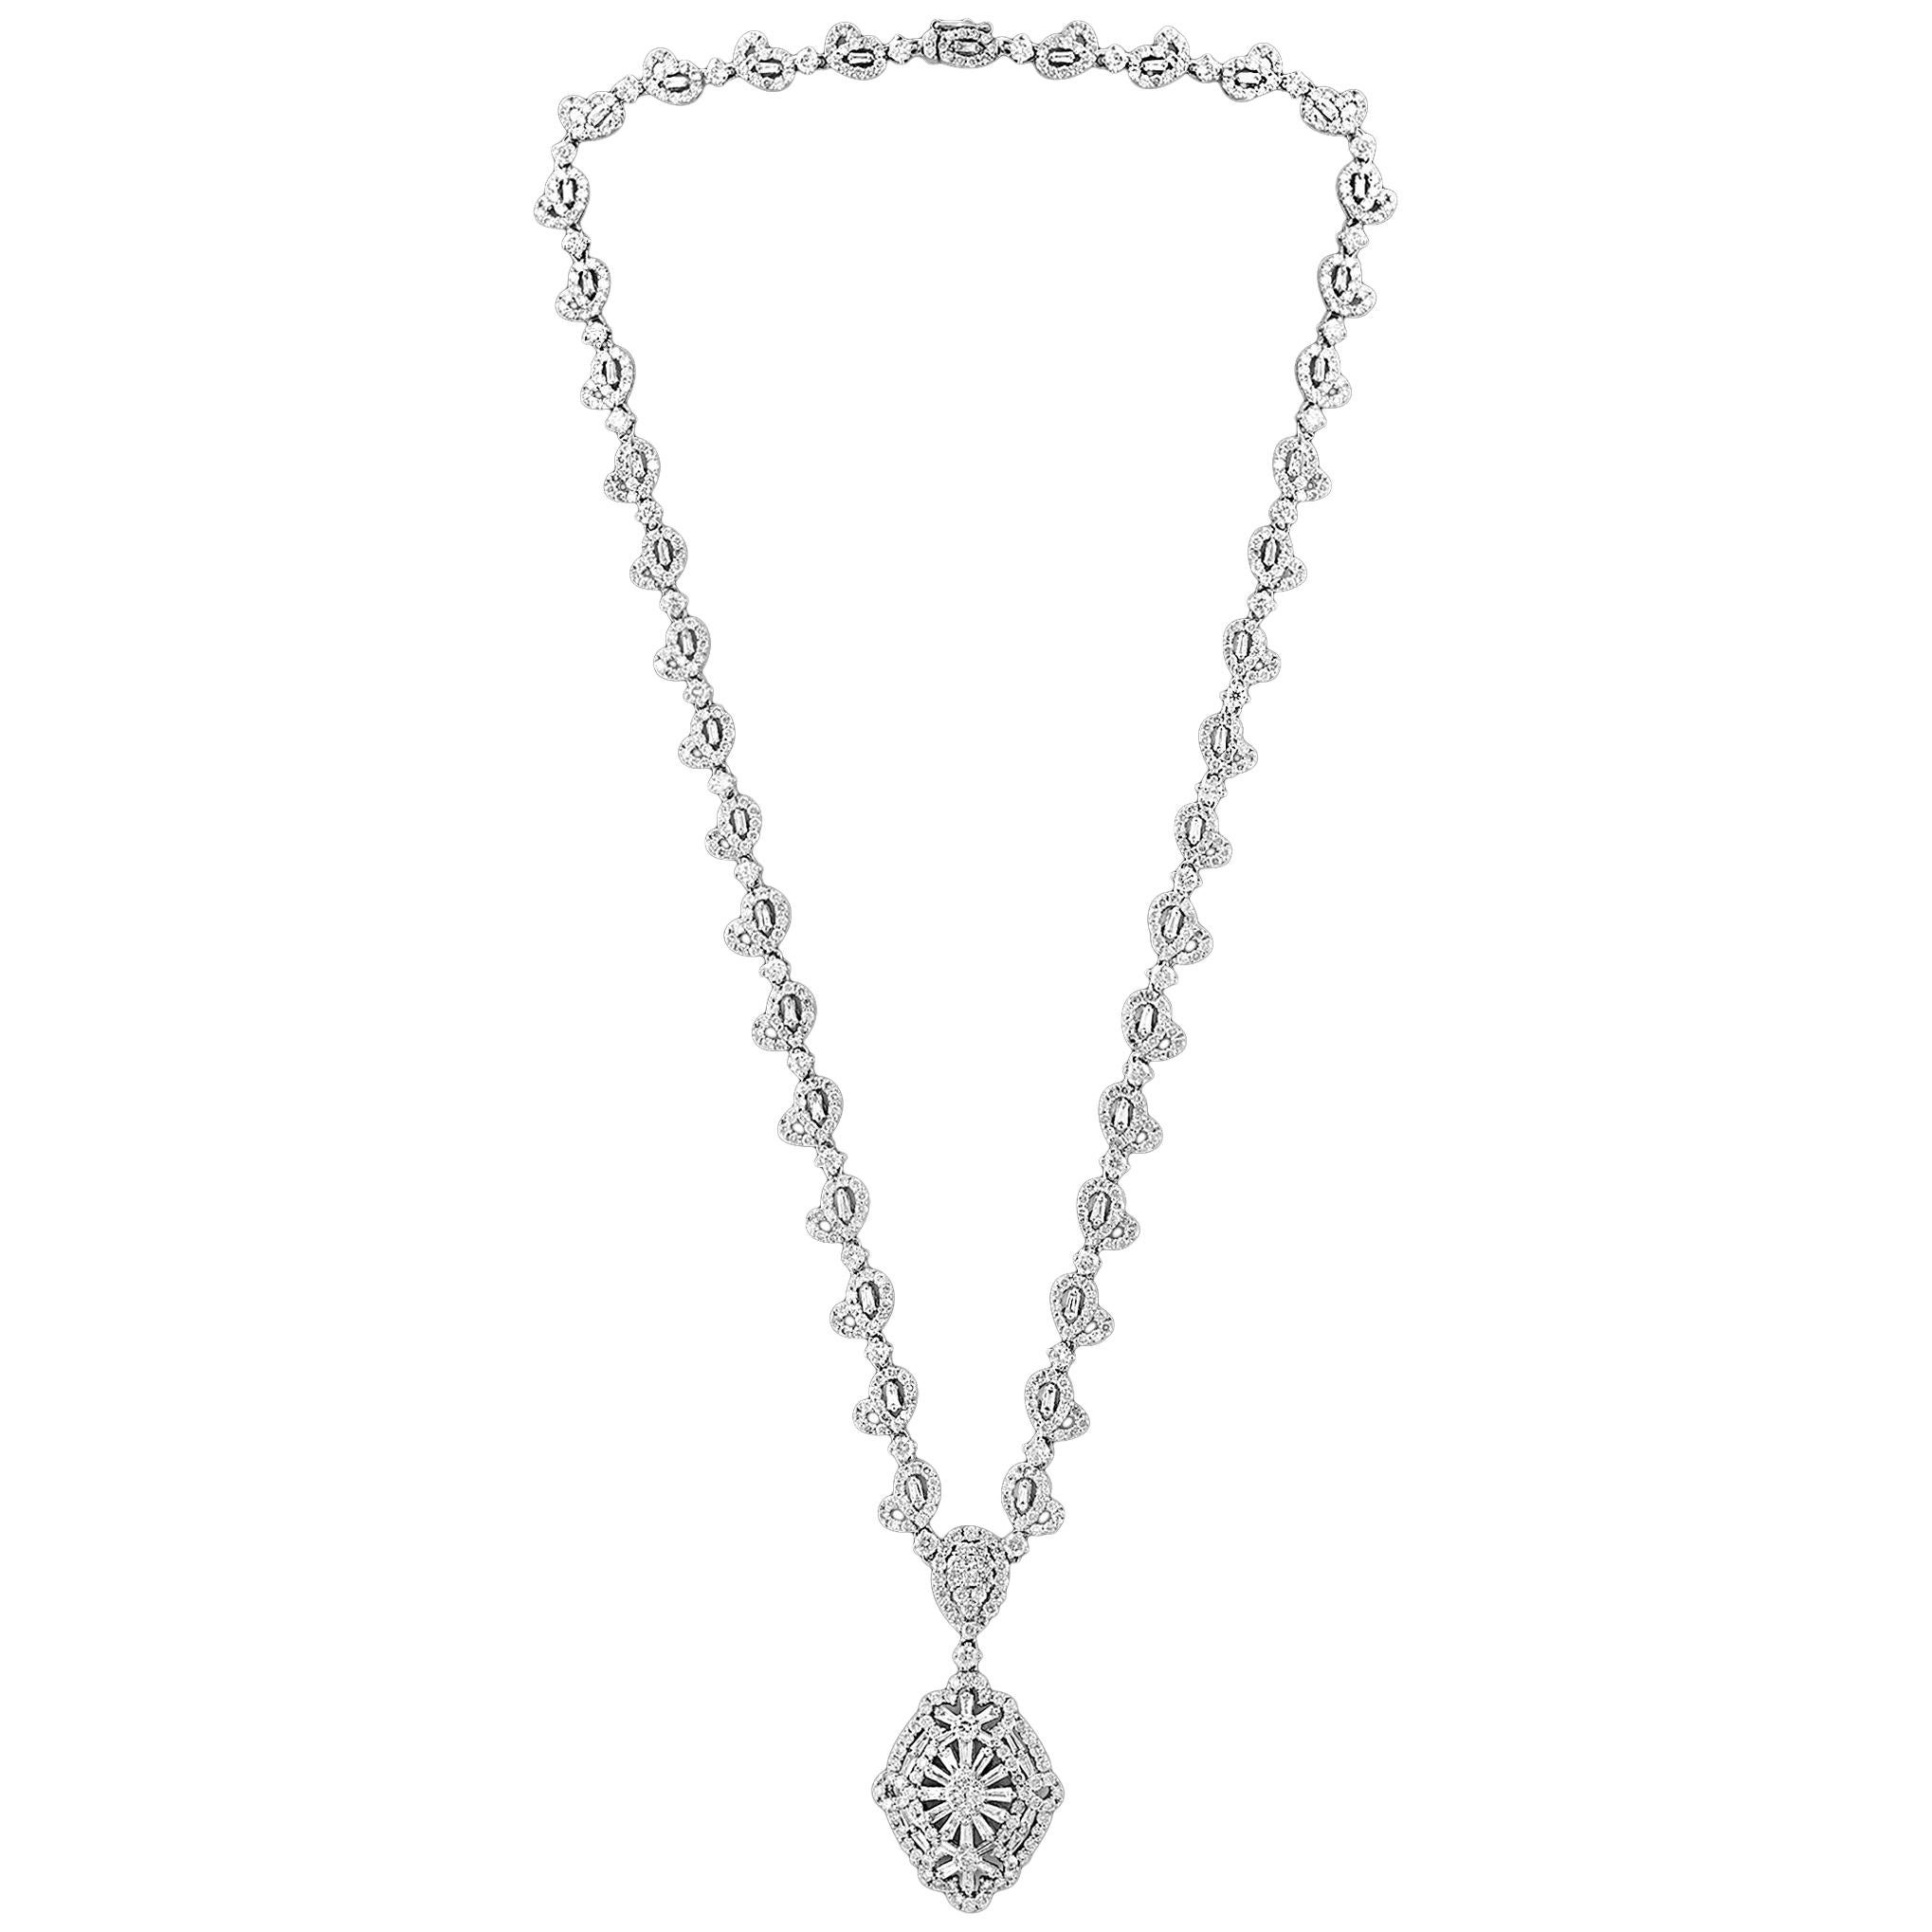 11.4 Carat Diamond Necklace in 18 Karat White Gold Bridal Brand New